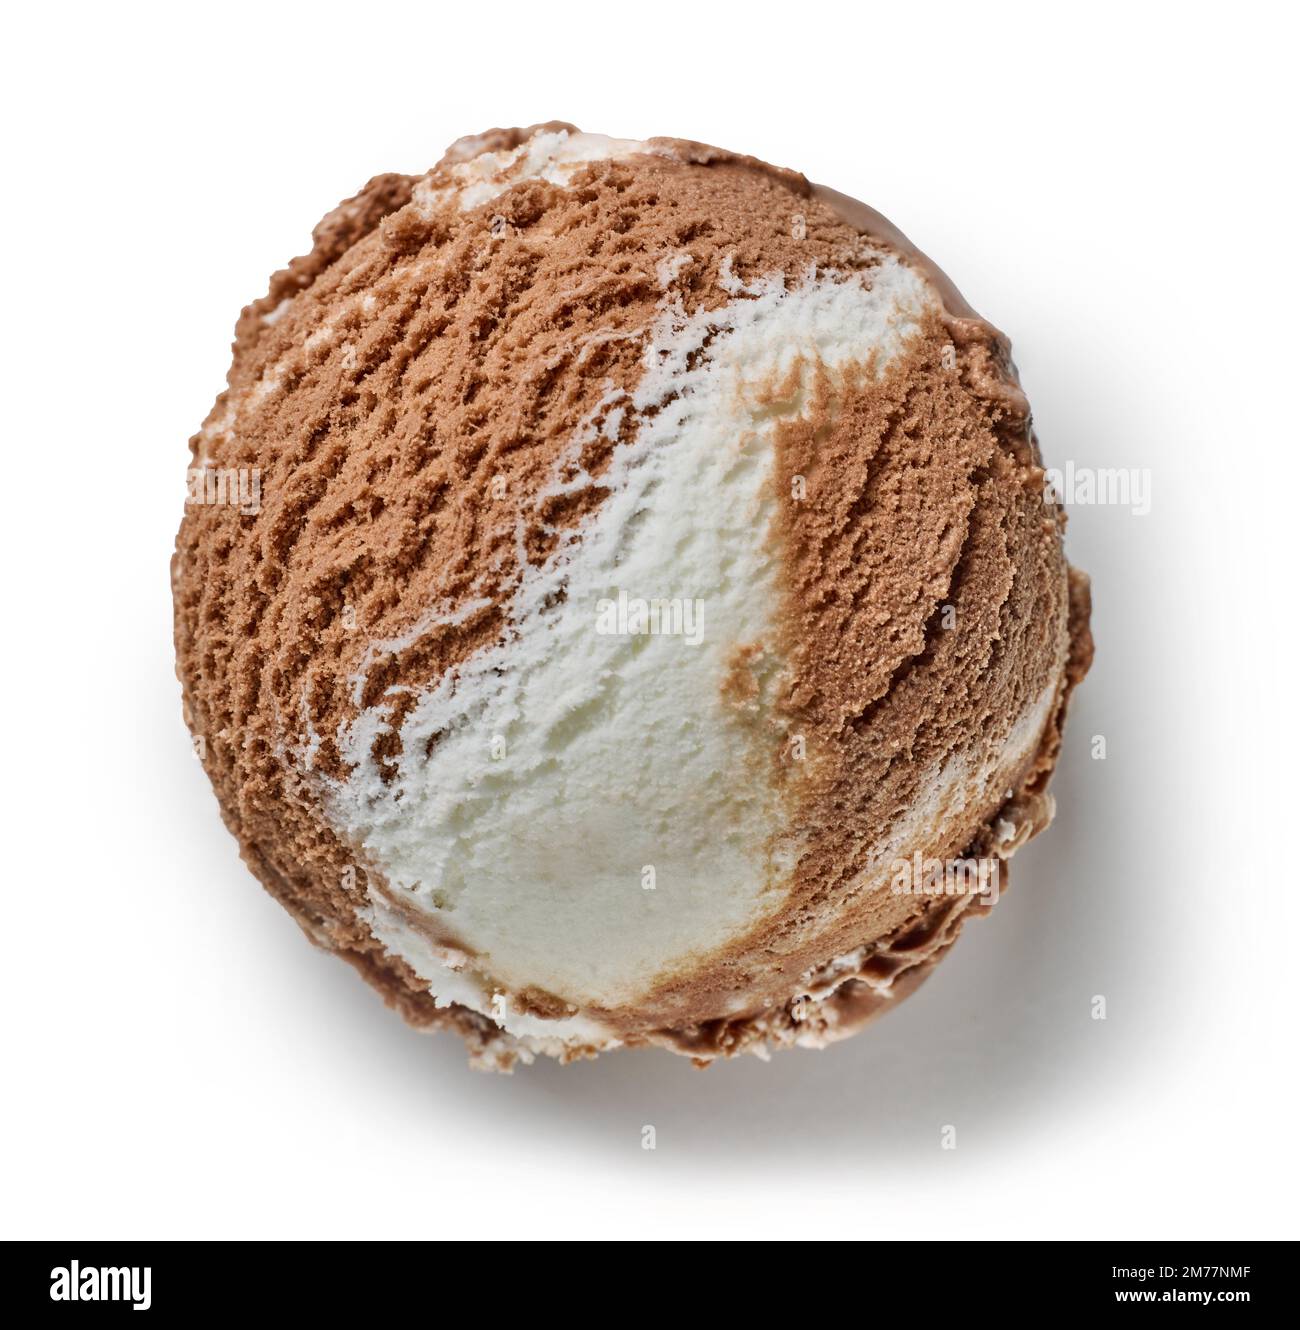 https://c8.alamy.com/comp/2M77NMF/chocolate-and-vanilla-ice-cream-ball-isolated-on-white-background-top-view-2M77NMF.jpg